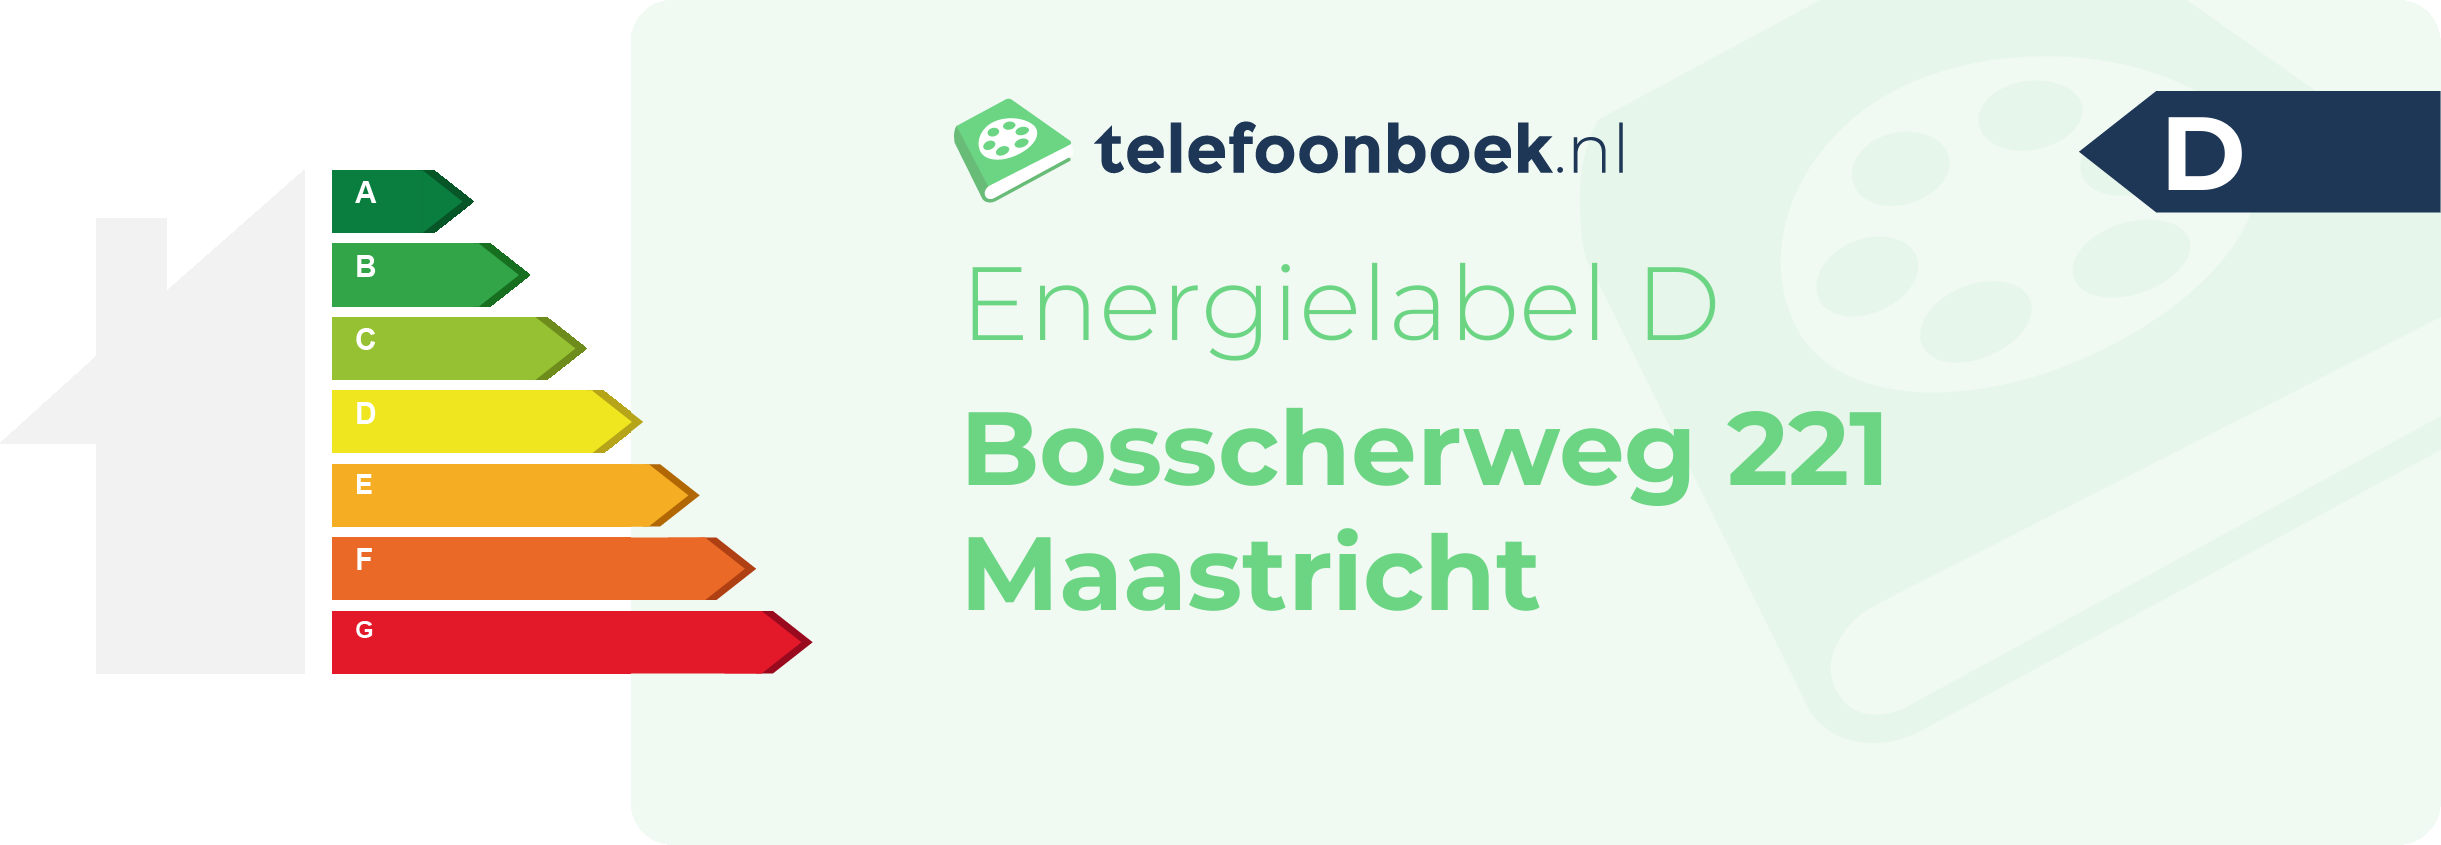 Energielabel Bosscherweg 221 Maastricht